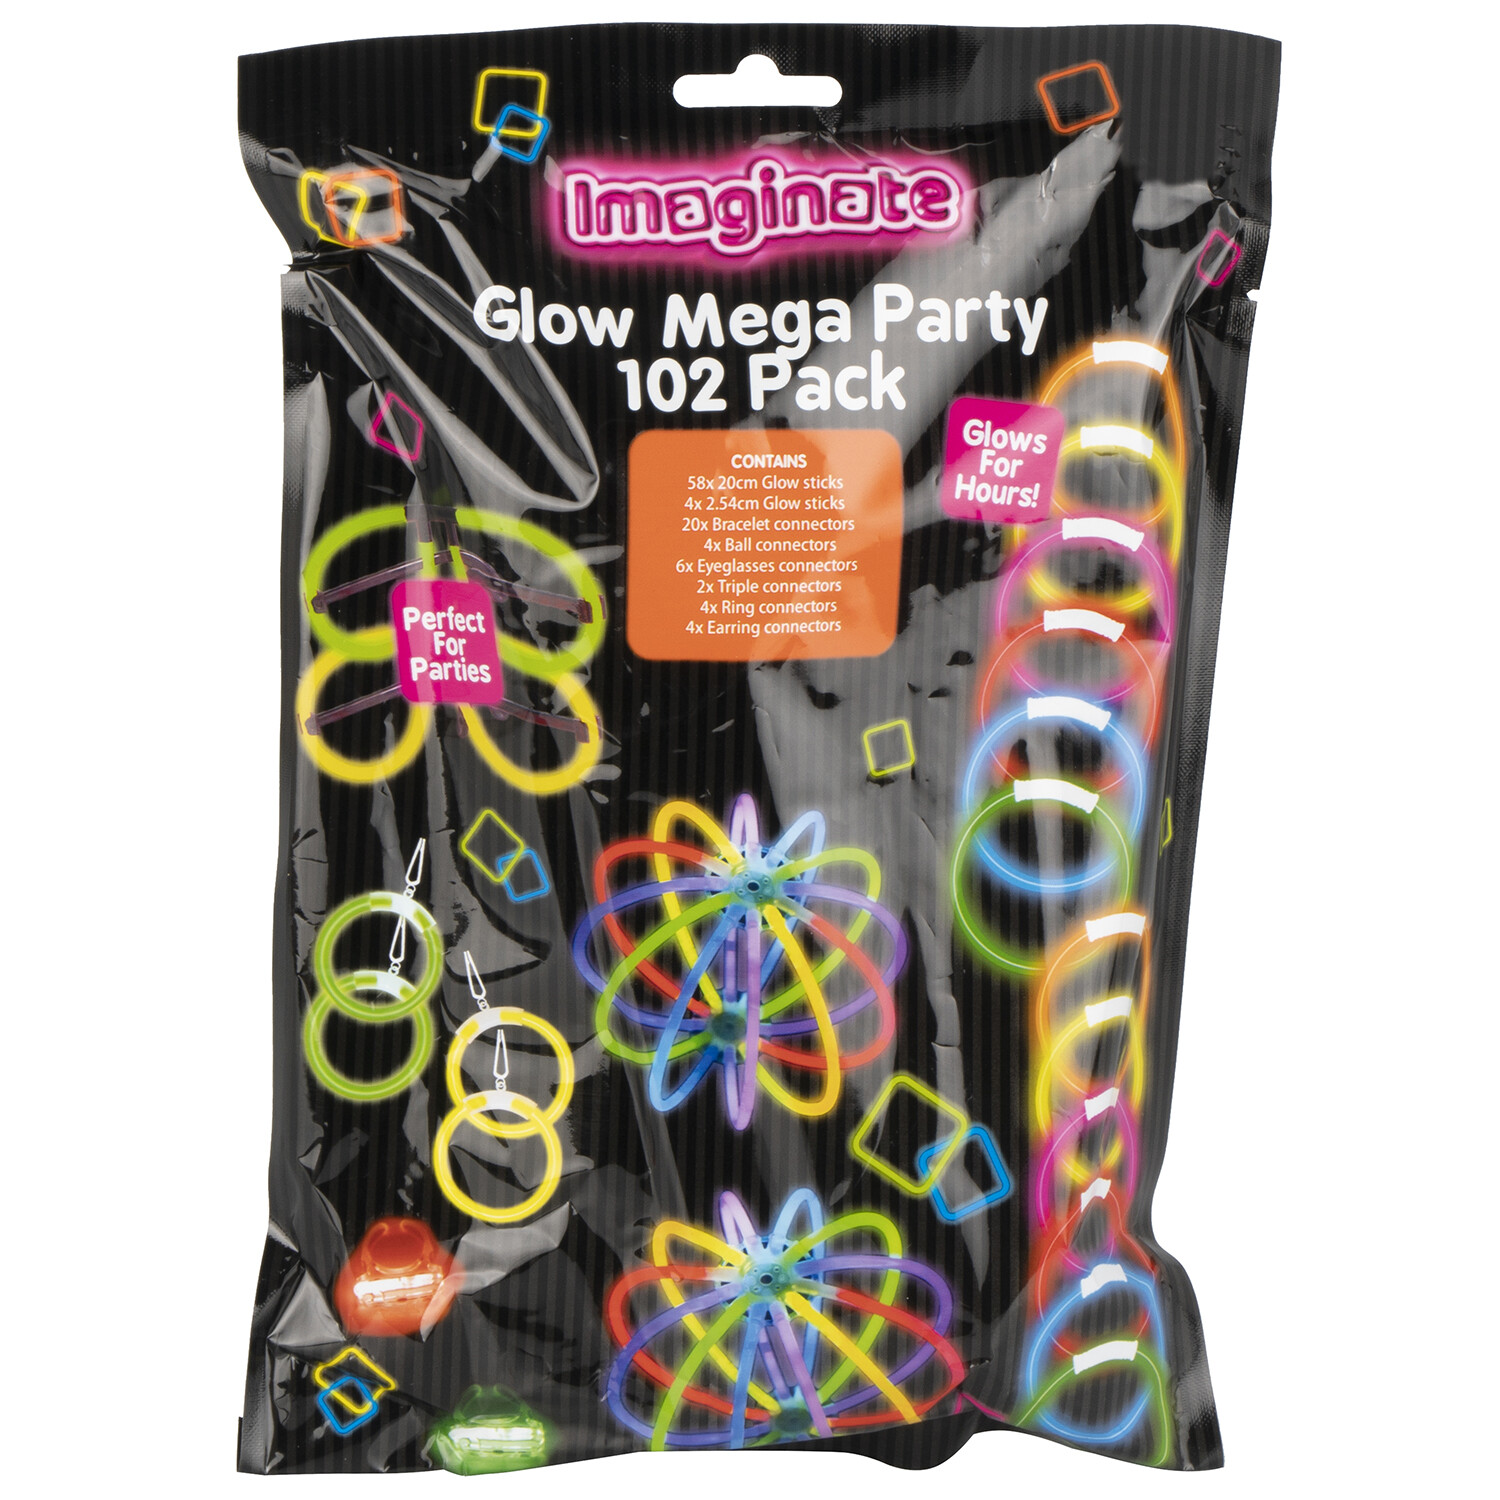 Imaginate Glow Mega Party 102 Pack Image